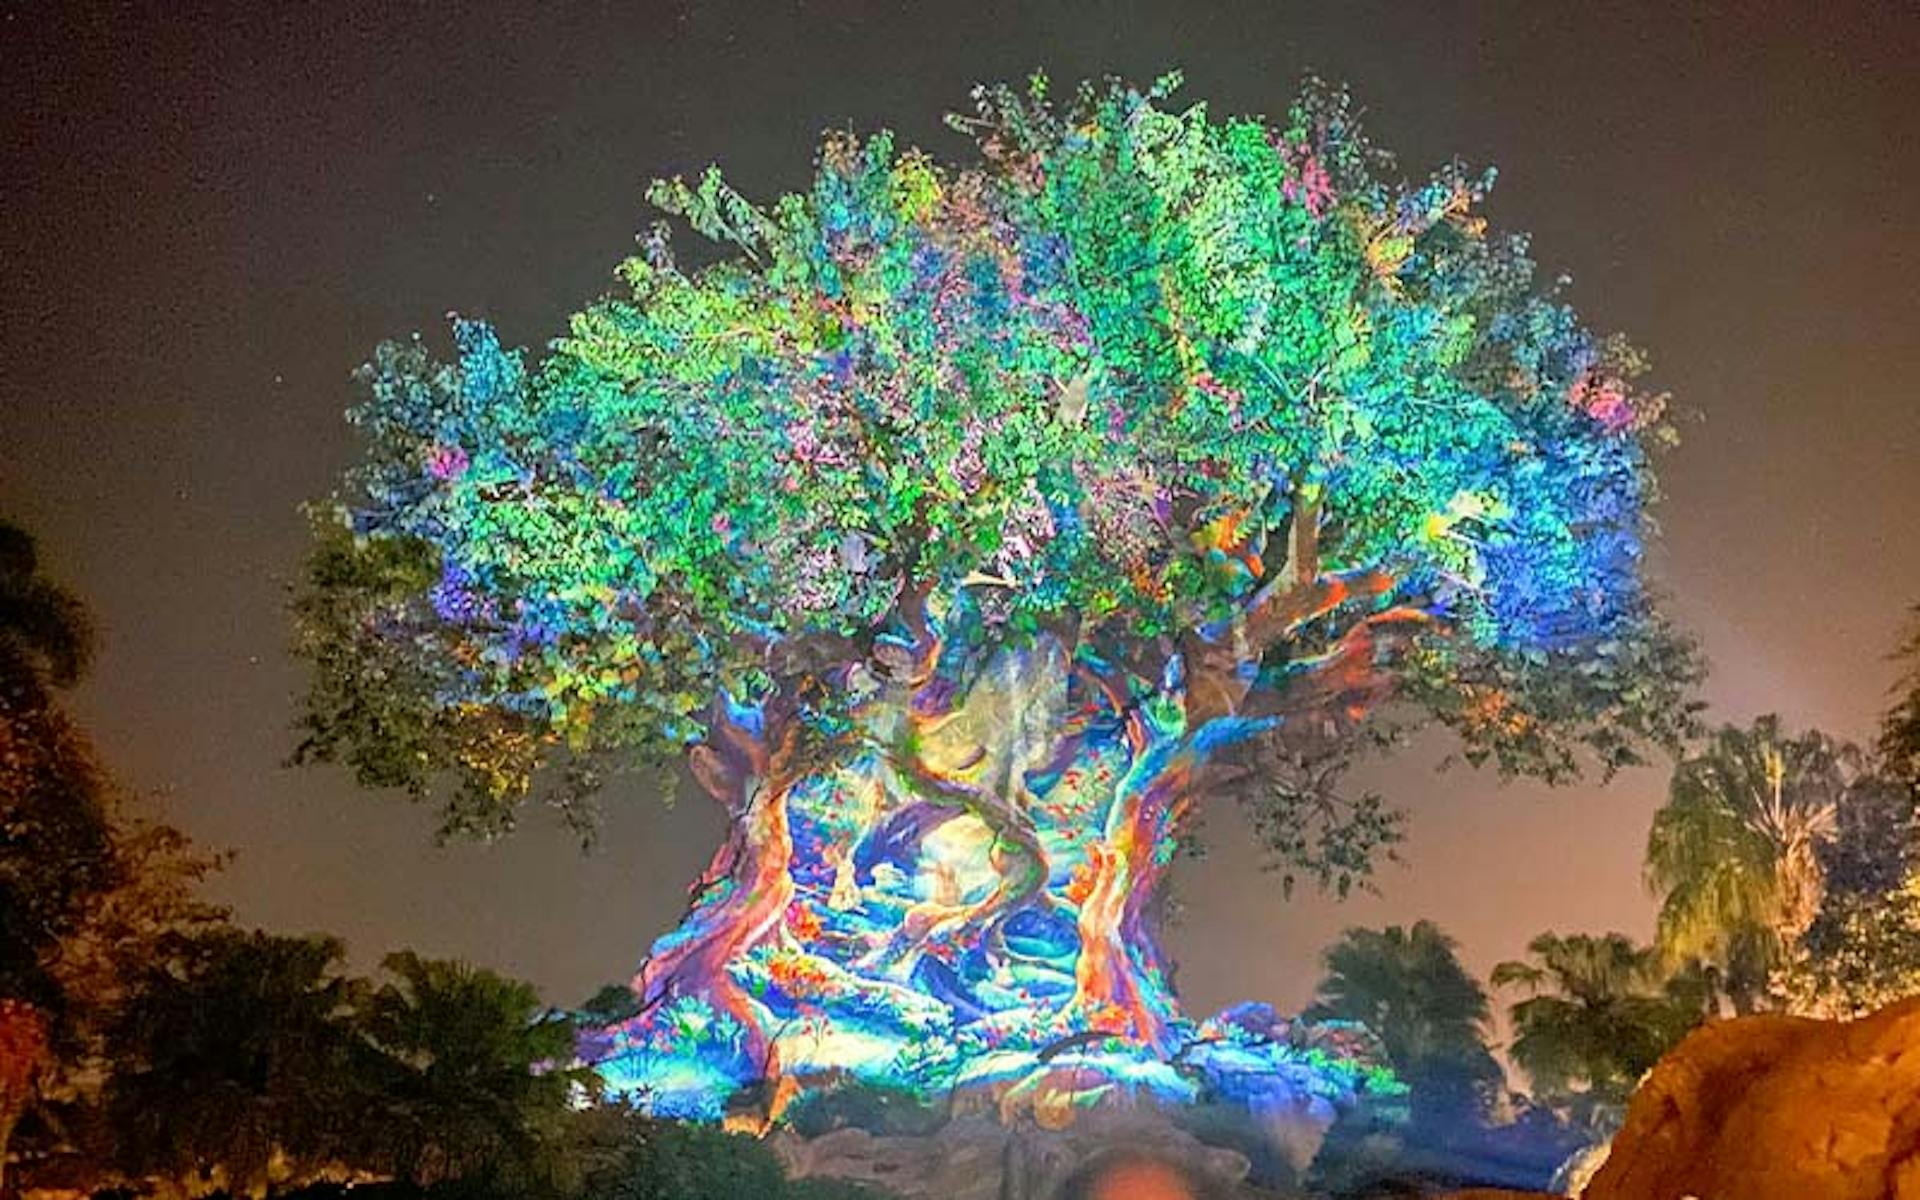 Image Description: Disney’s Tree of Life 